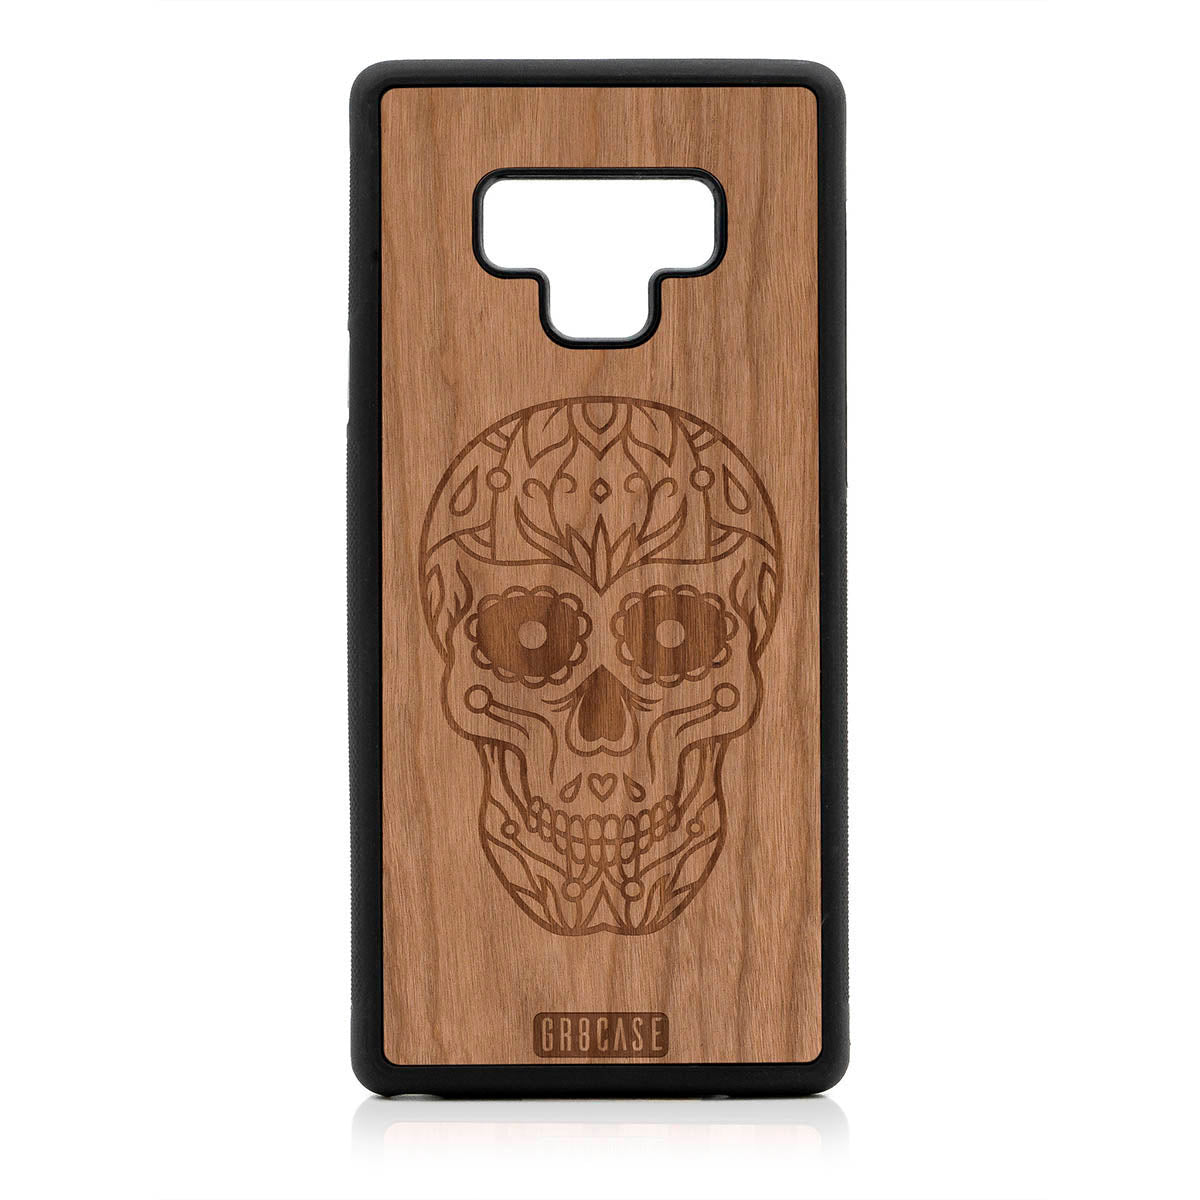 Sugar Skull Design Wood Case For Samsung Galaxy Note 9 by GR8CASE